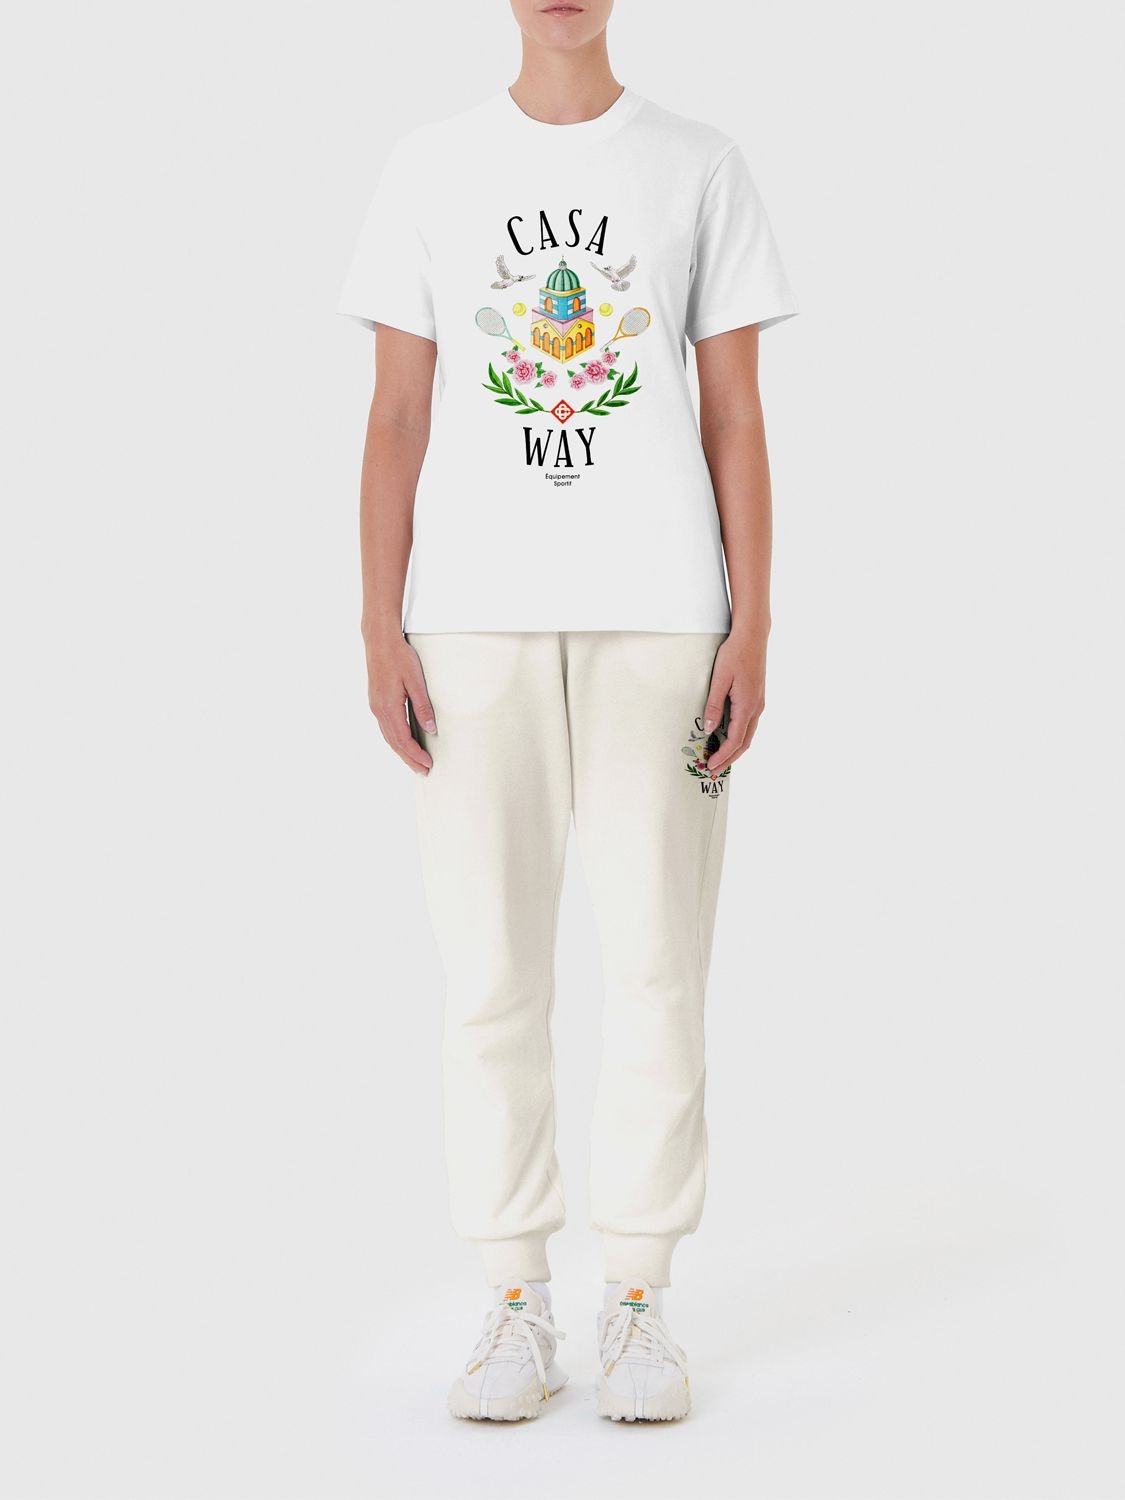 Image of Casa Way Printed Jersey T-shirt